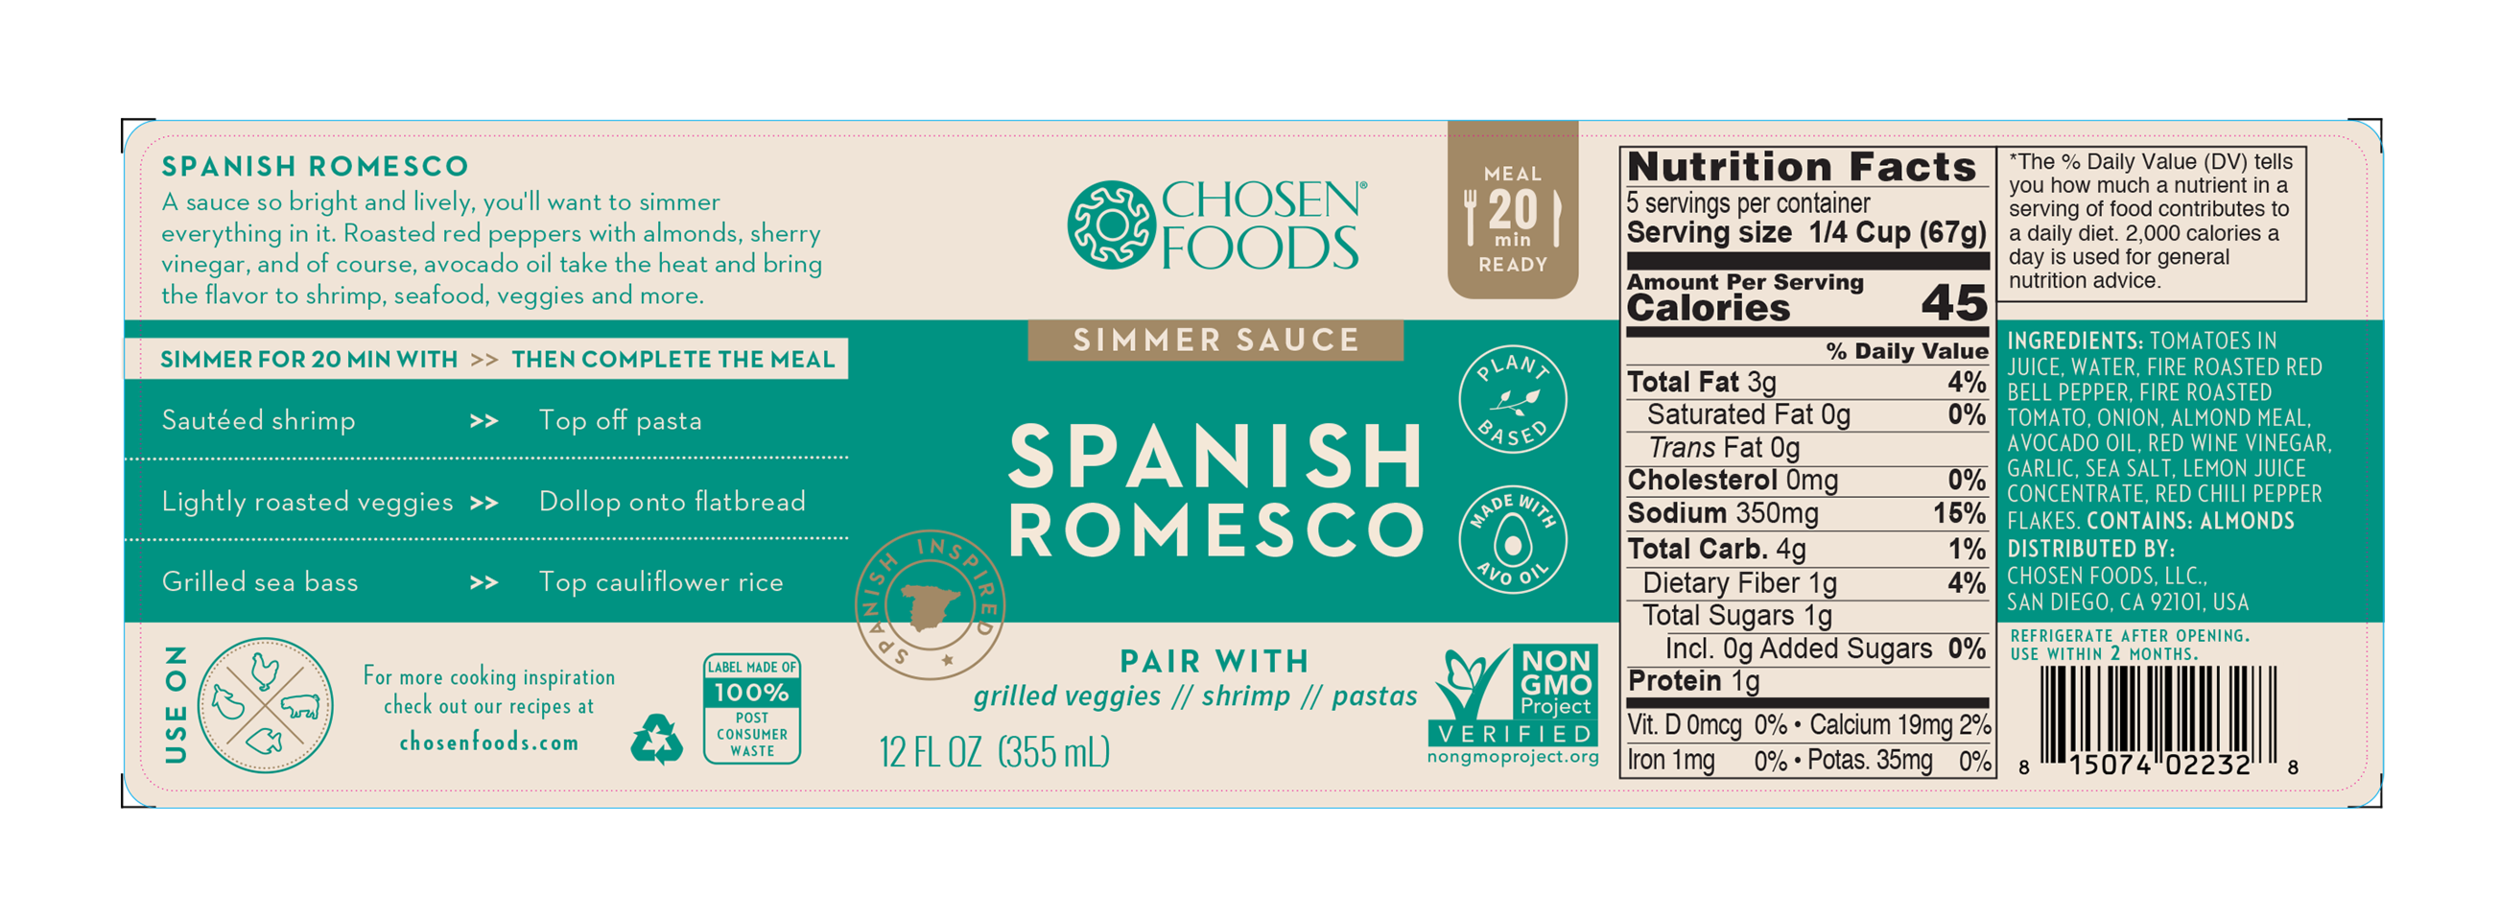 US_Simmer Sauce_Spanish Romesco_12oz Label.png